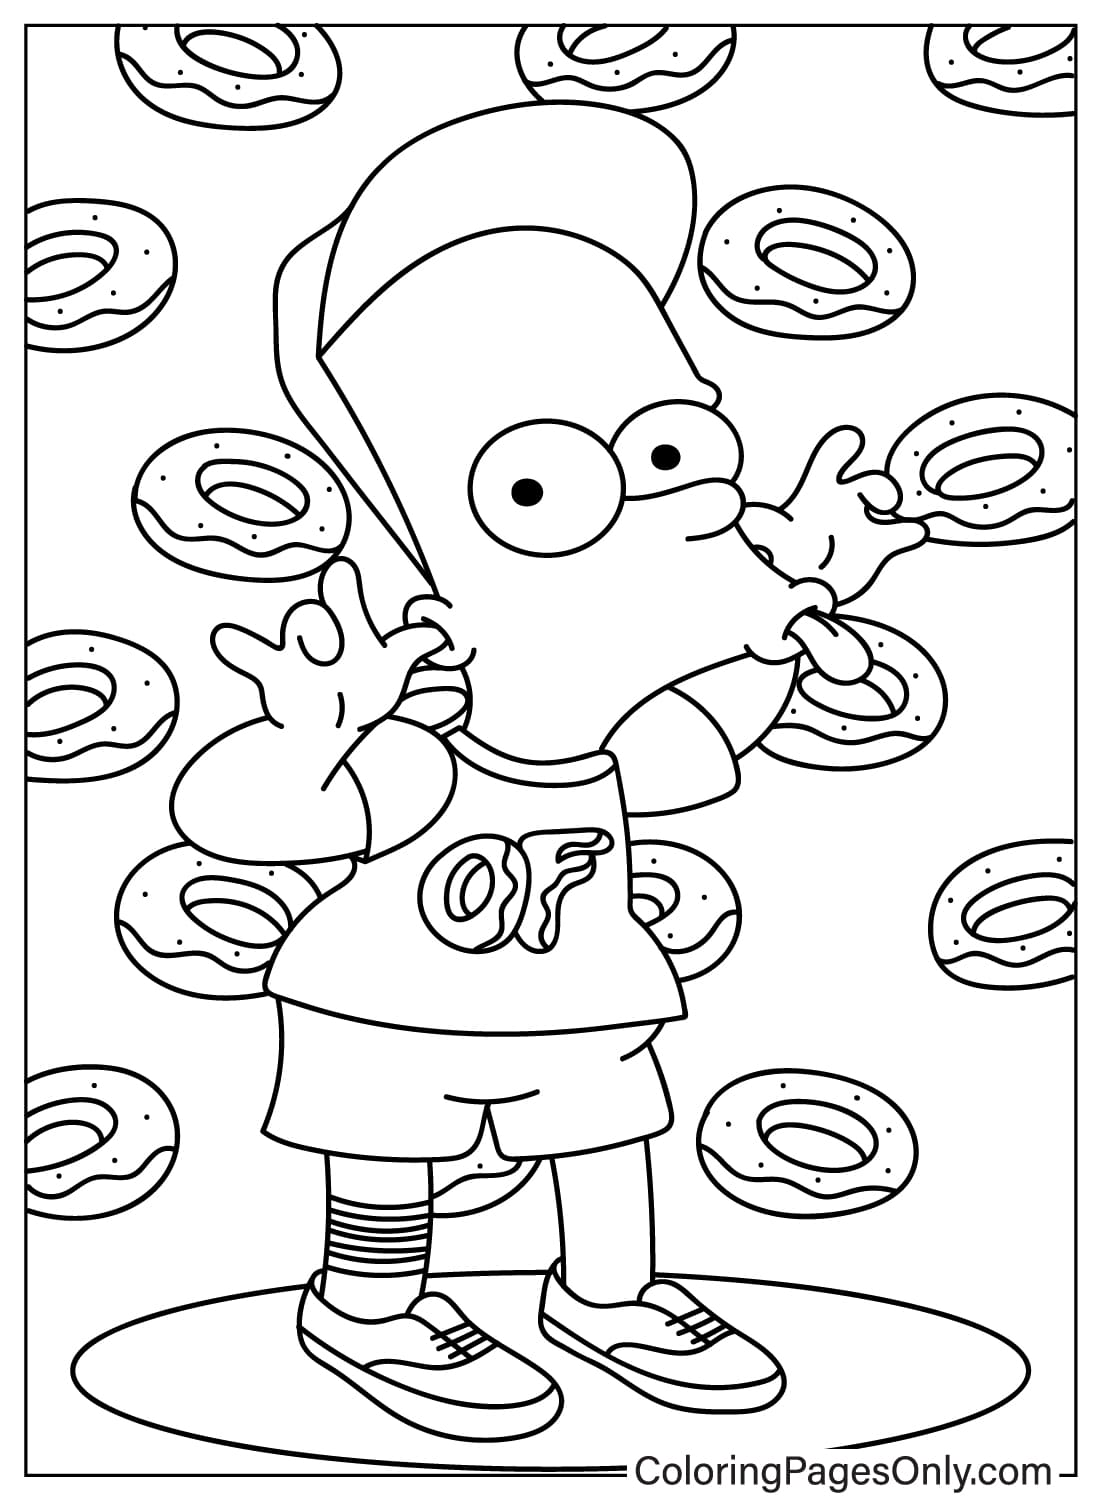 Bart da colorare gratis dai Simpsons